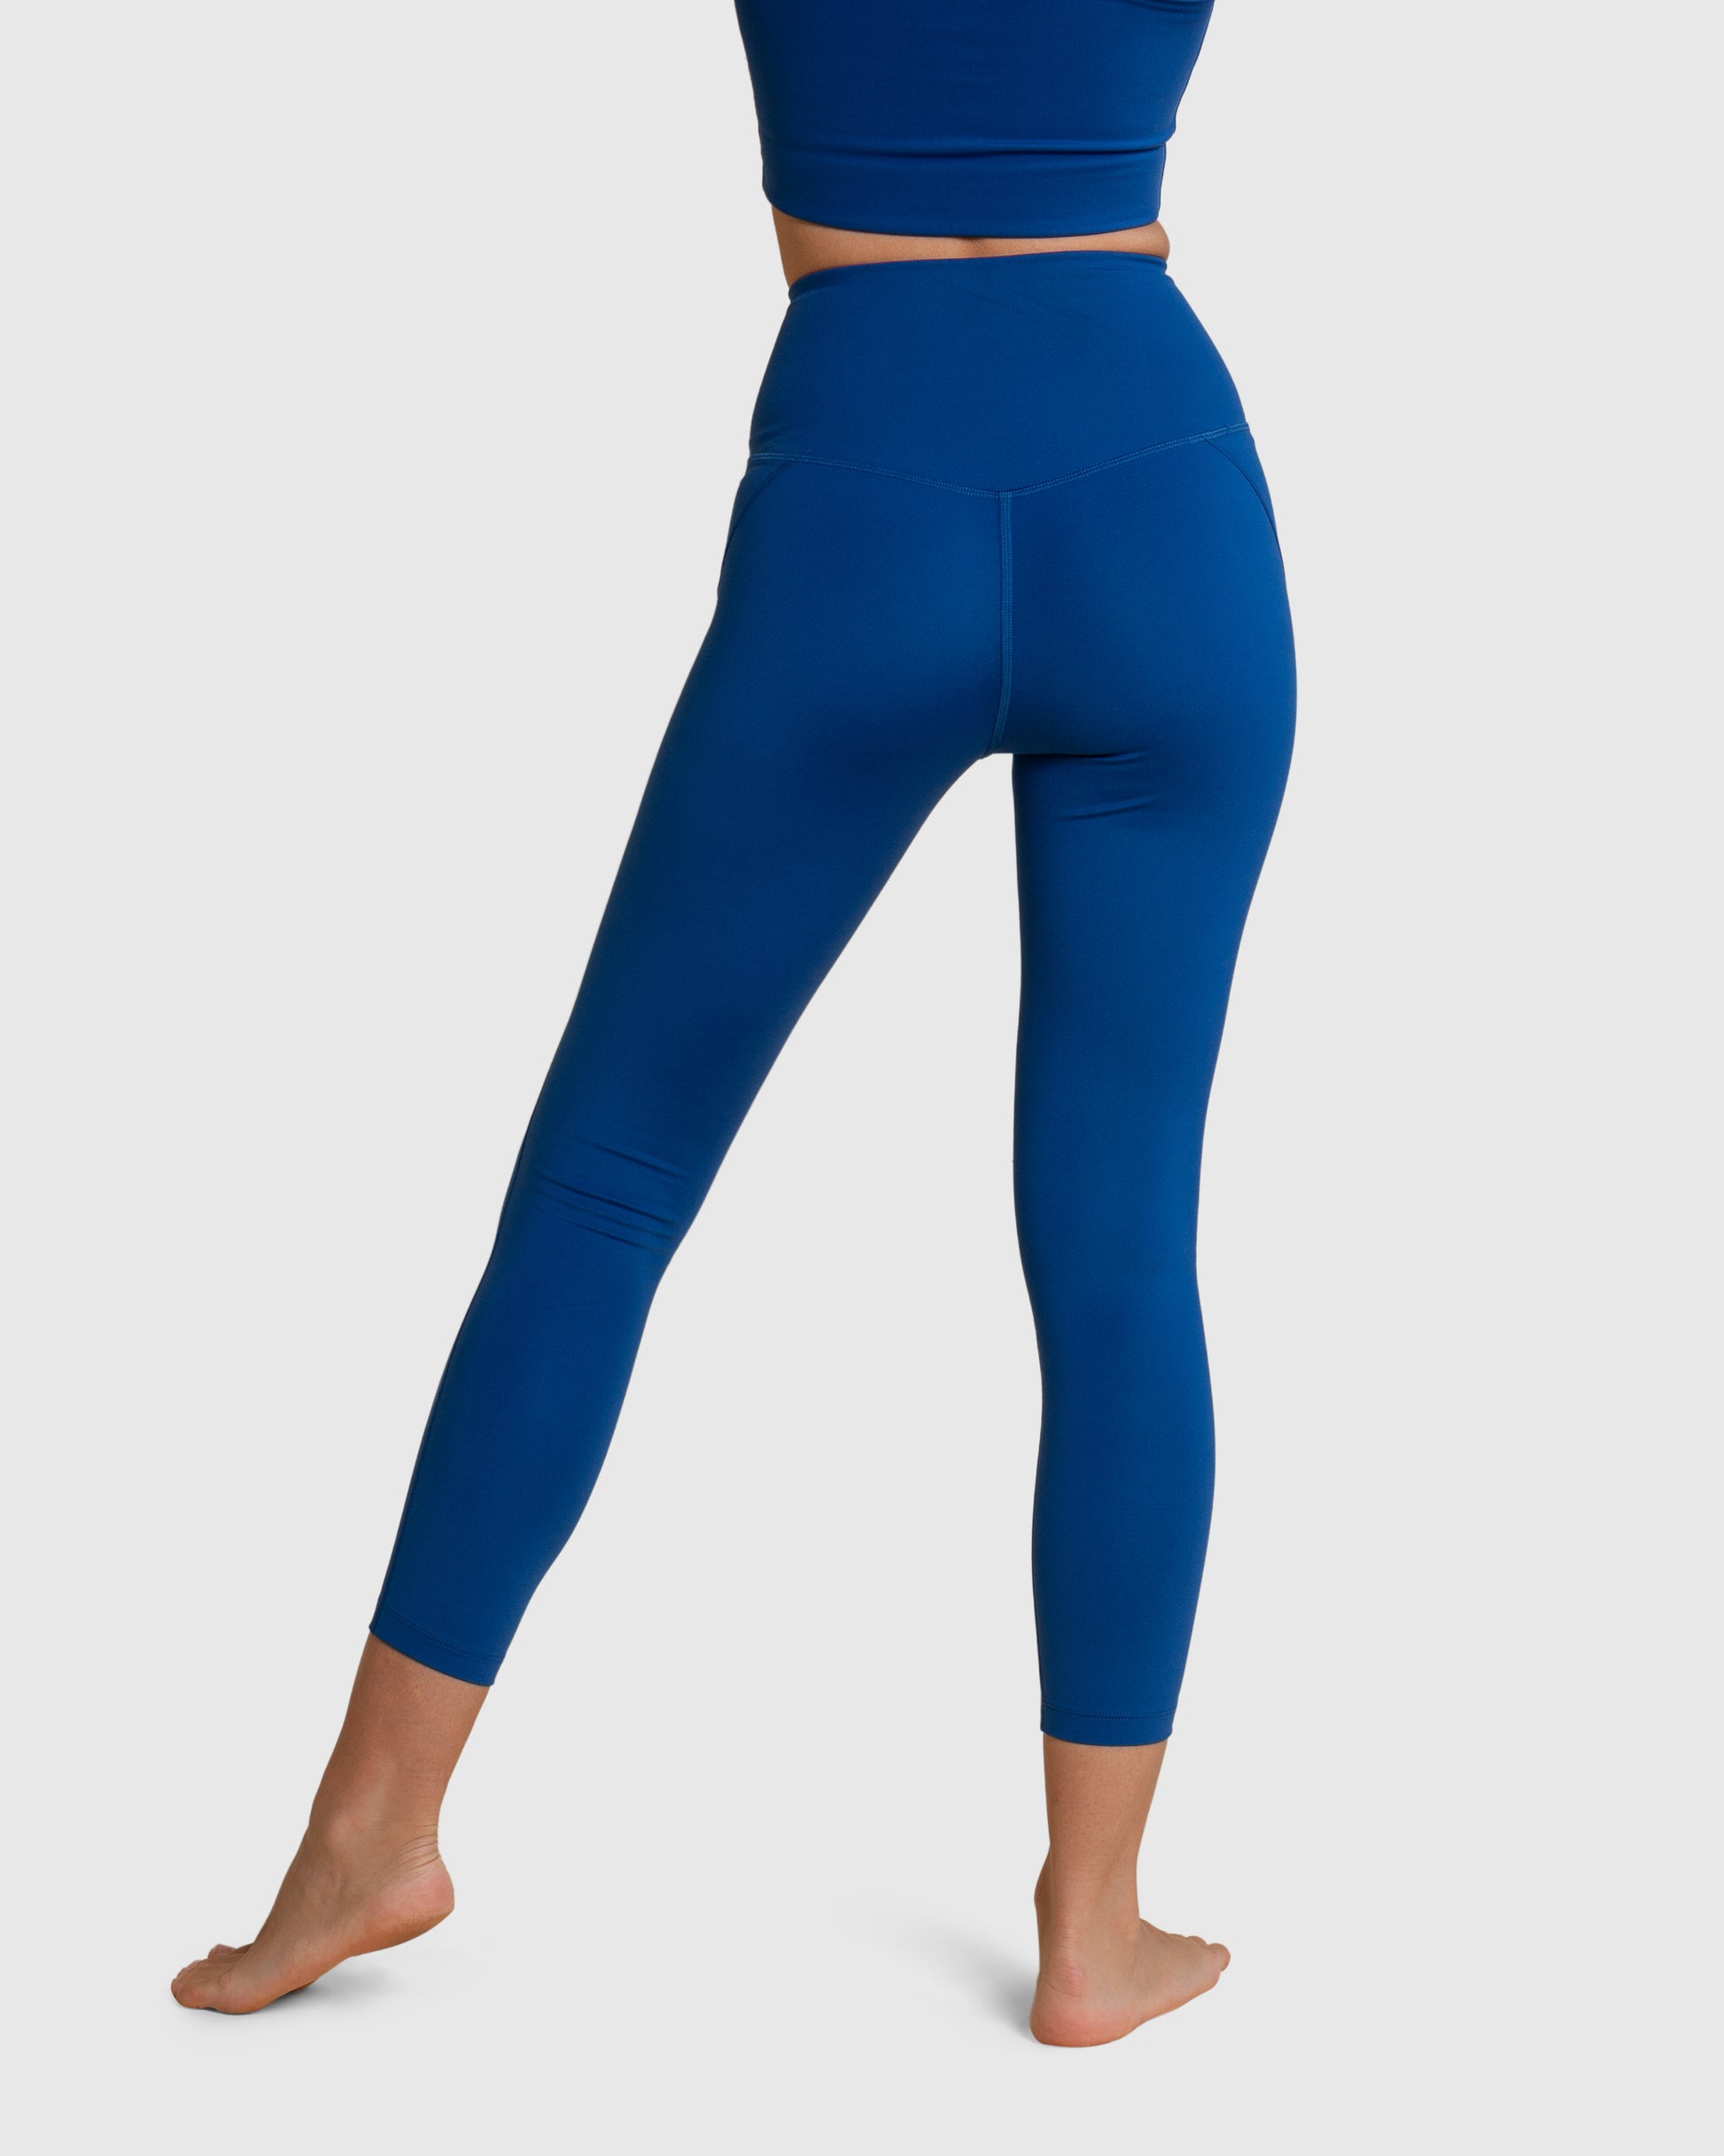 Blue Ultralight high-rise leggings, Girlfriend Collective